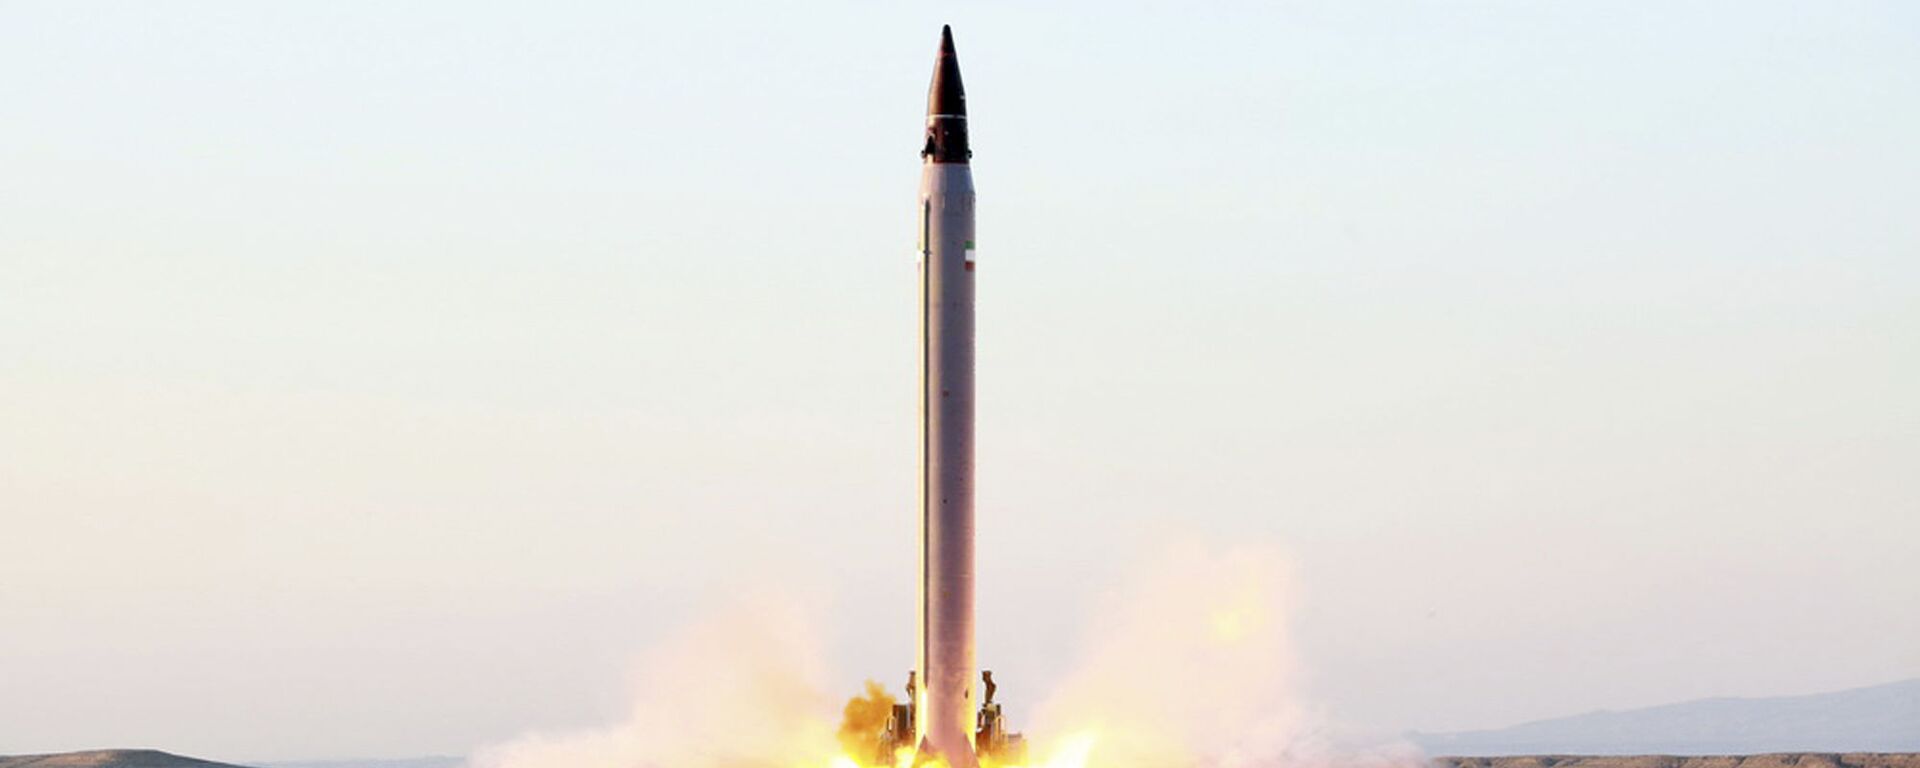 إطلاق صاروخ بالستي إيراني - سبوتنيك عربي, 1920, 15.01.2022